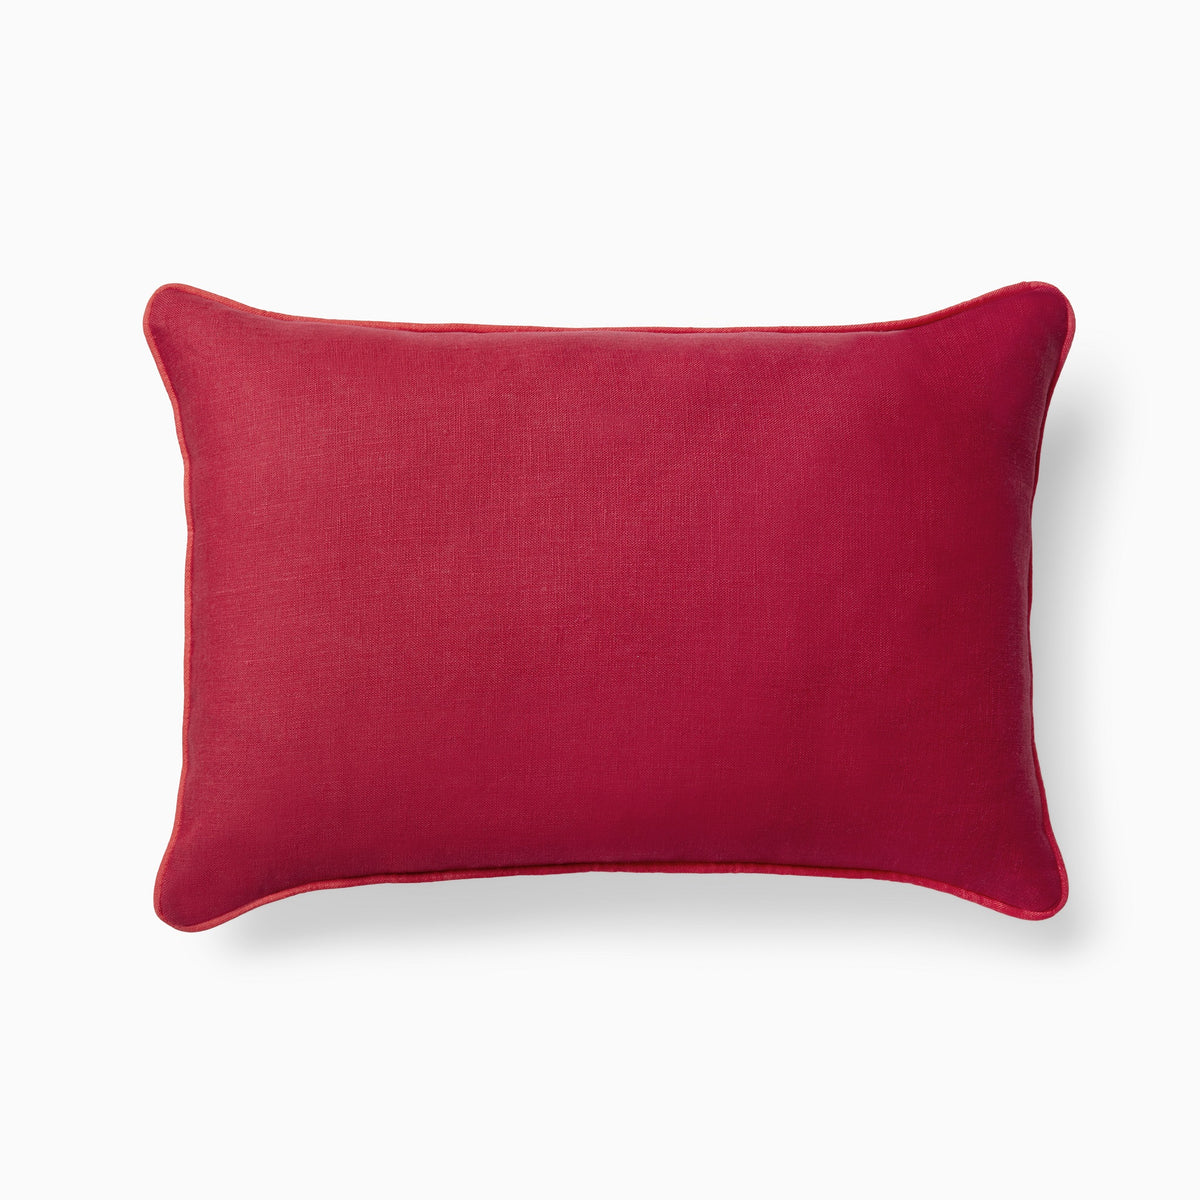 Clear Image of Sferra Manarola Decorative Pillow in Crimson/Poppy Front